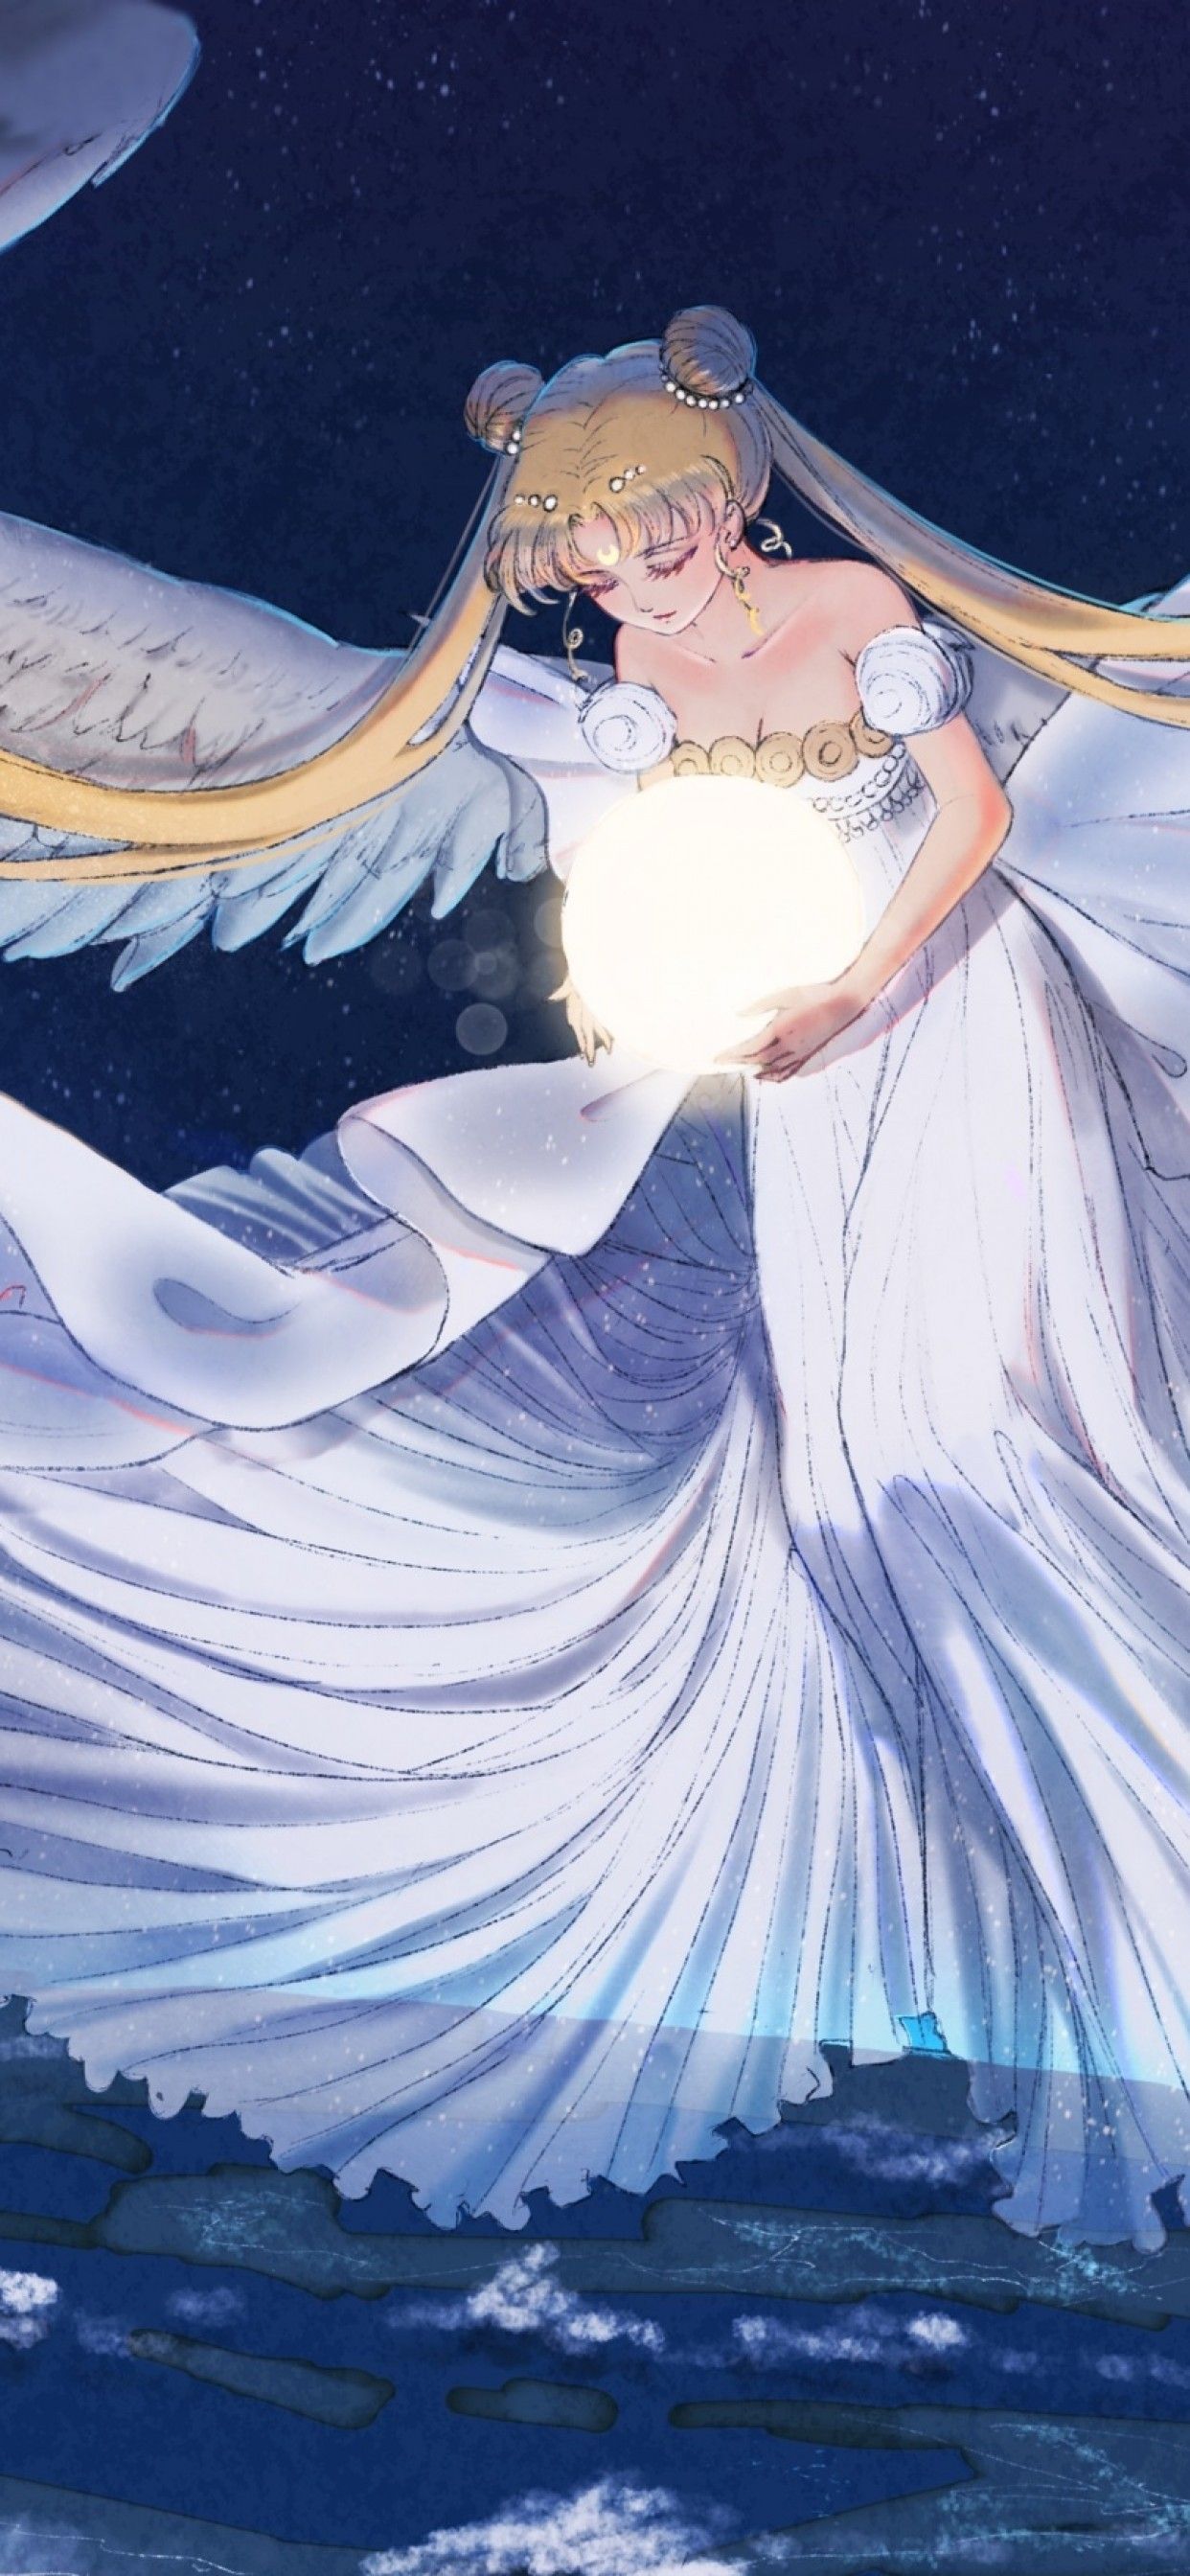 Download 1242x2688 Tsukino Usagi, Sailor Moon, Wings, Blonde, Sky, Stars, Earth, Light, White Dress Wallpaper for iPhone XS Max